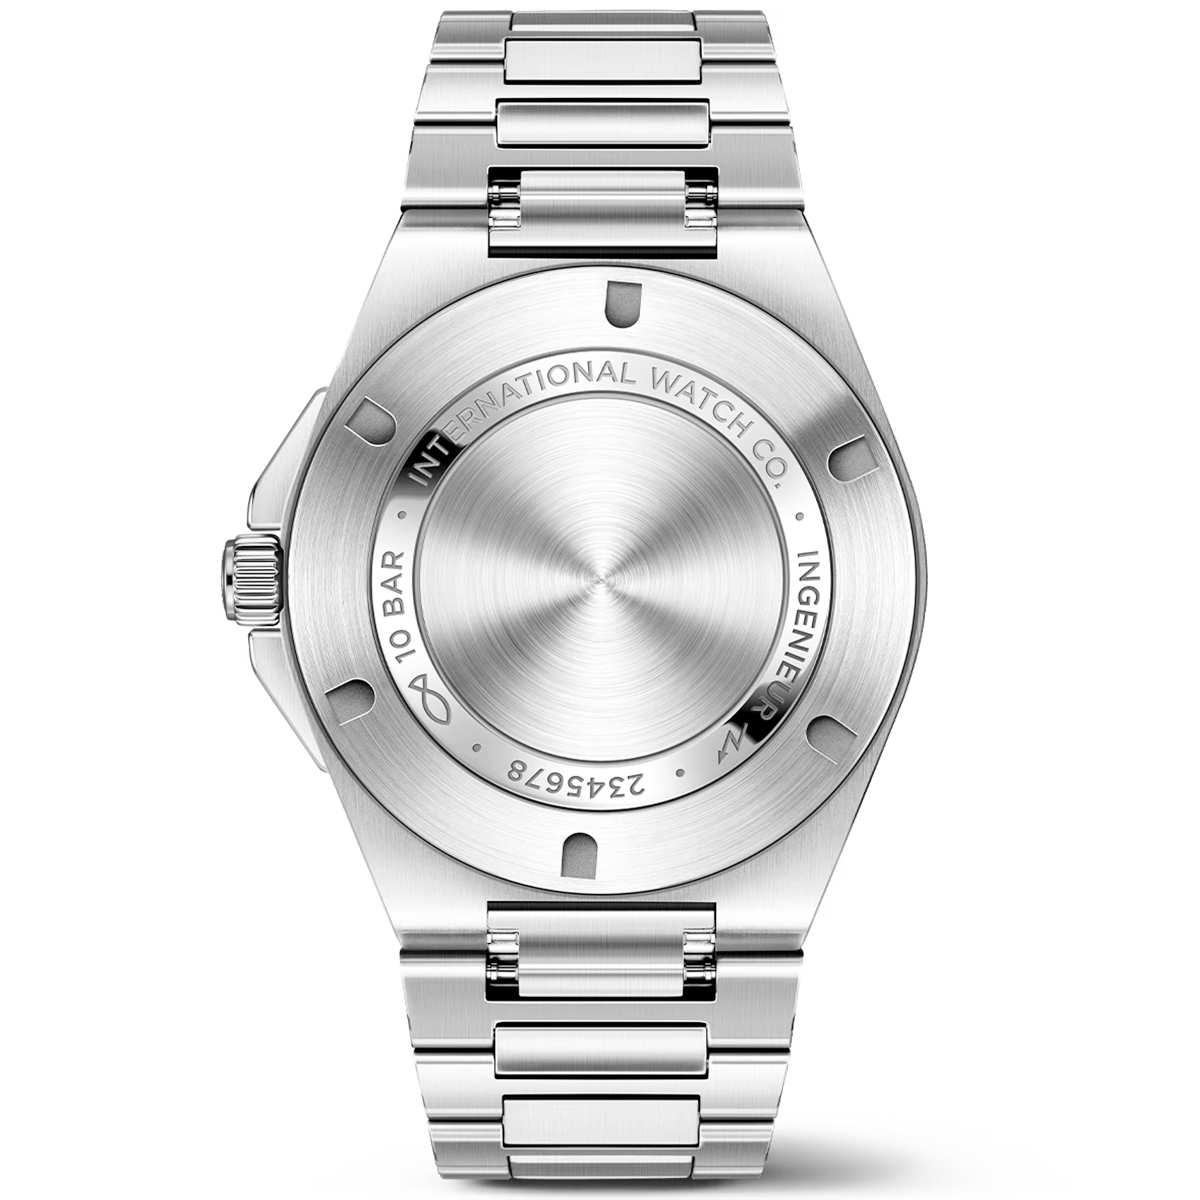 Ingenieur Automatic 40mm Silver Dial Bracelet Watch